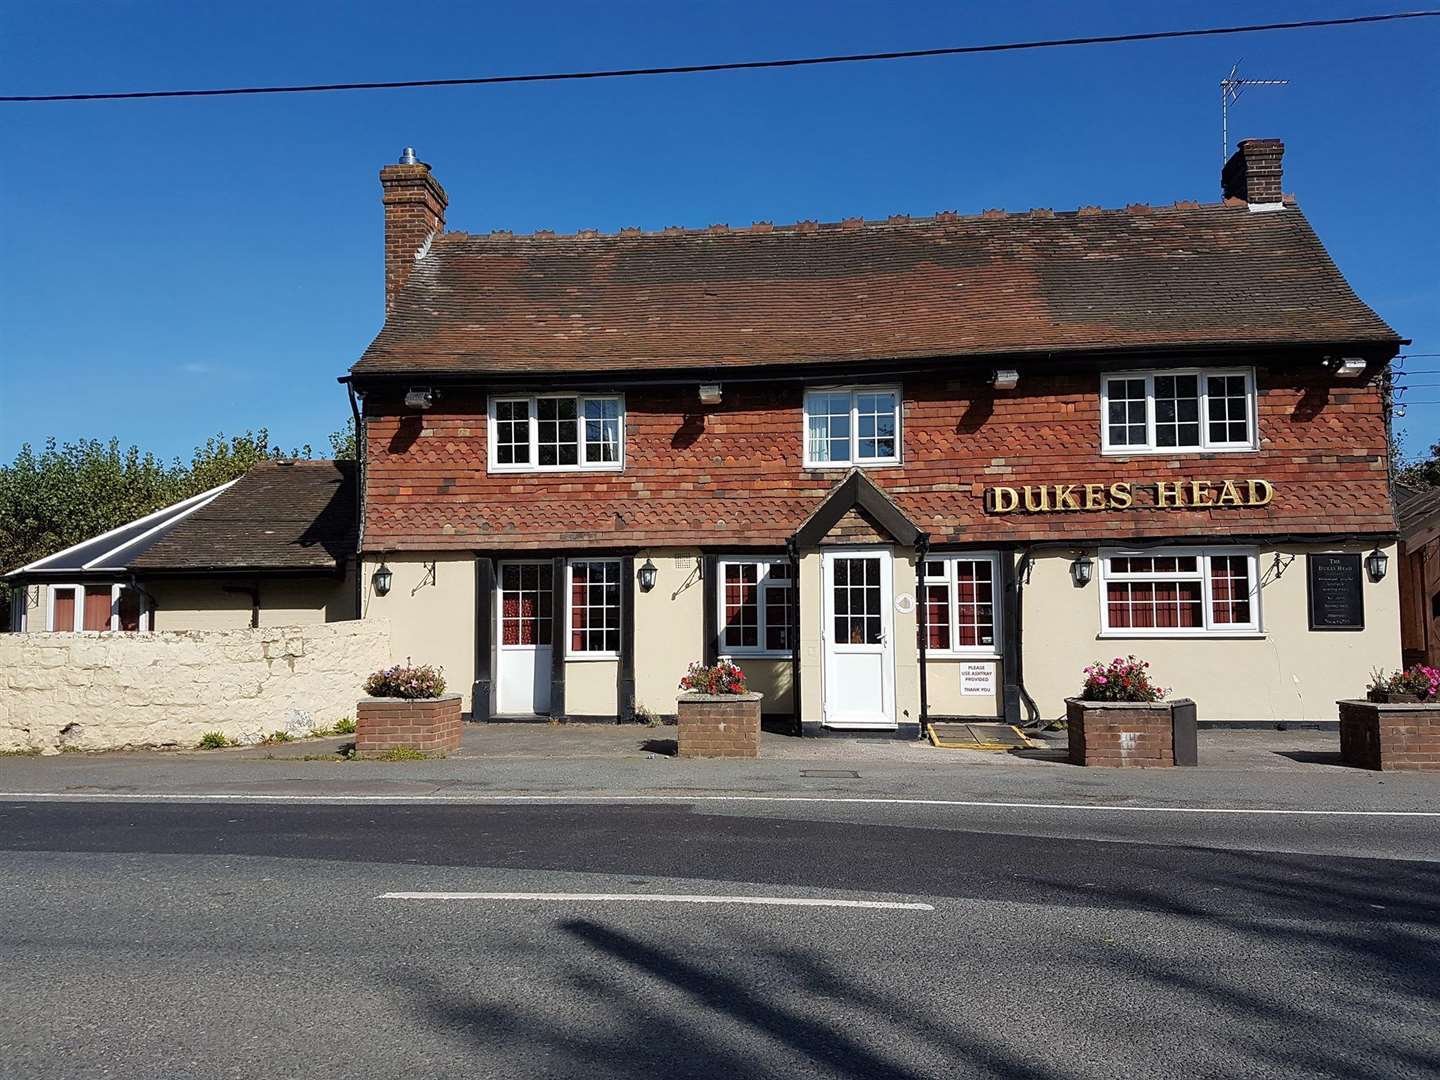 The Dukes Head pub in Sellindge